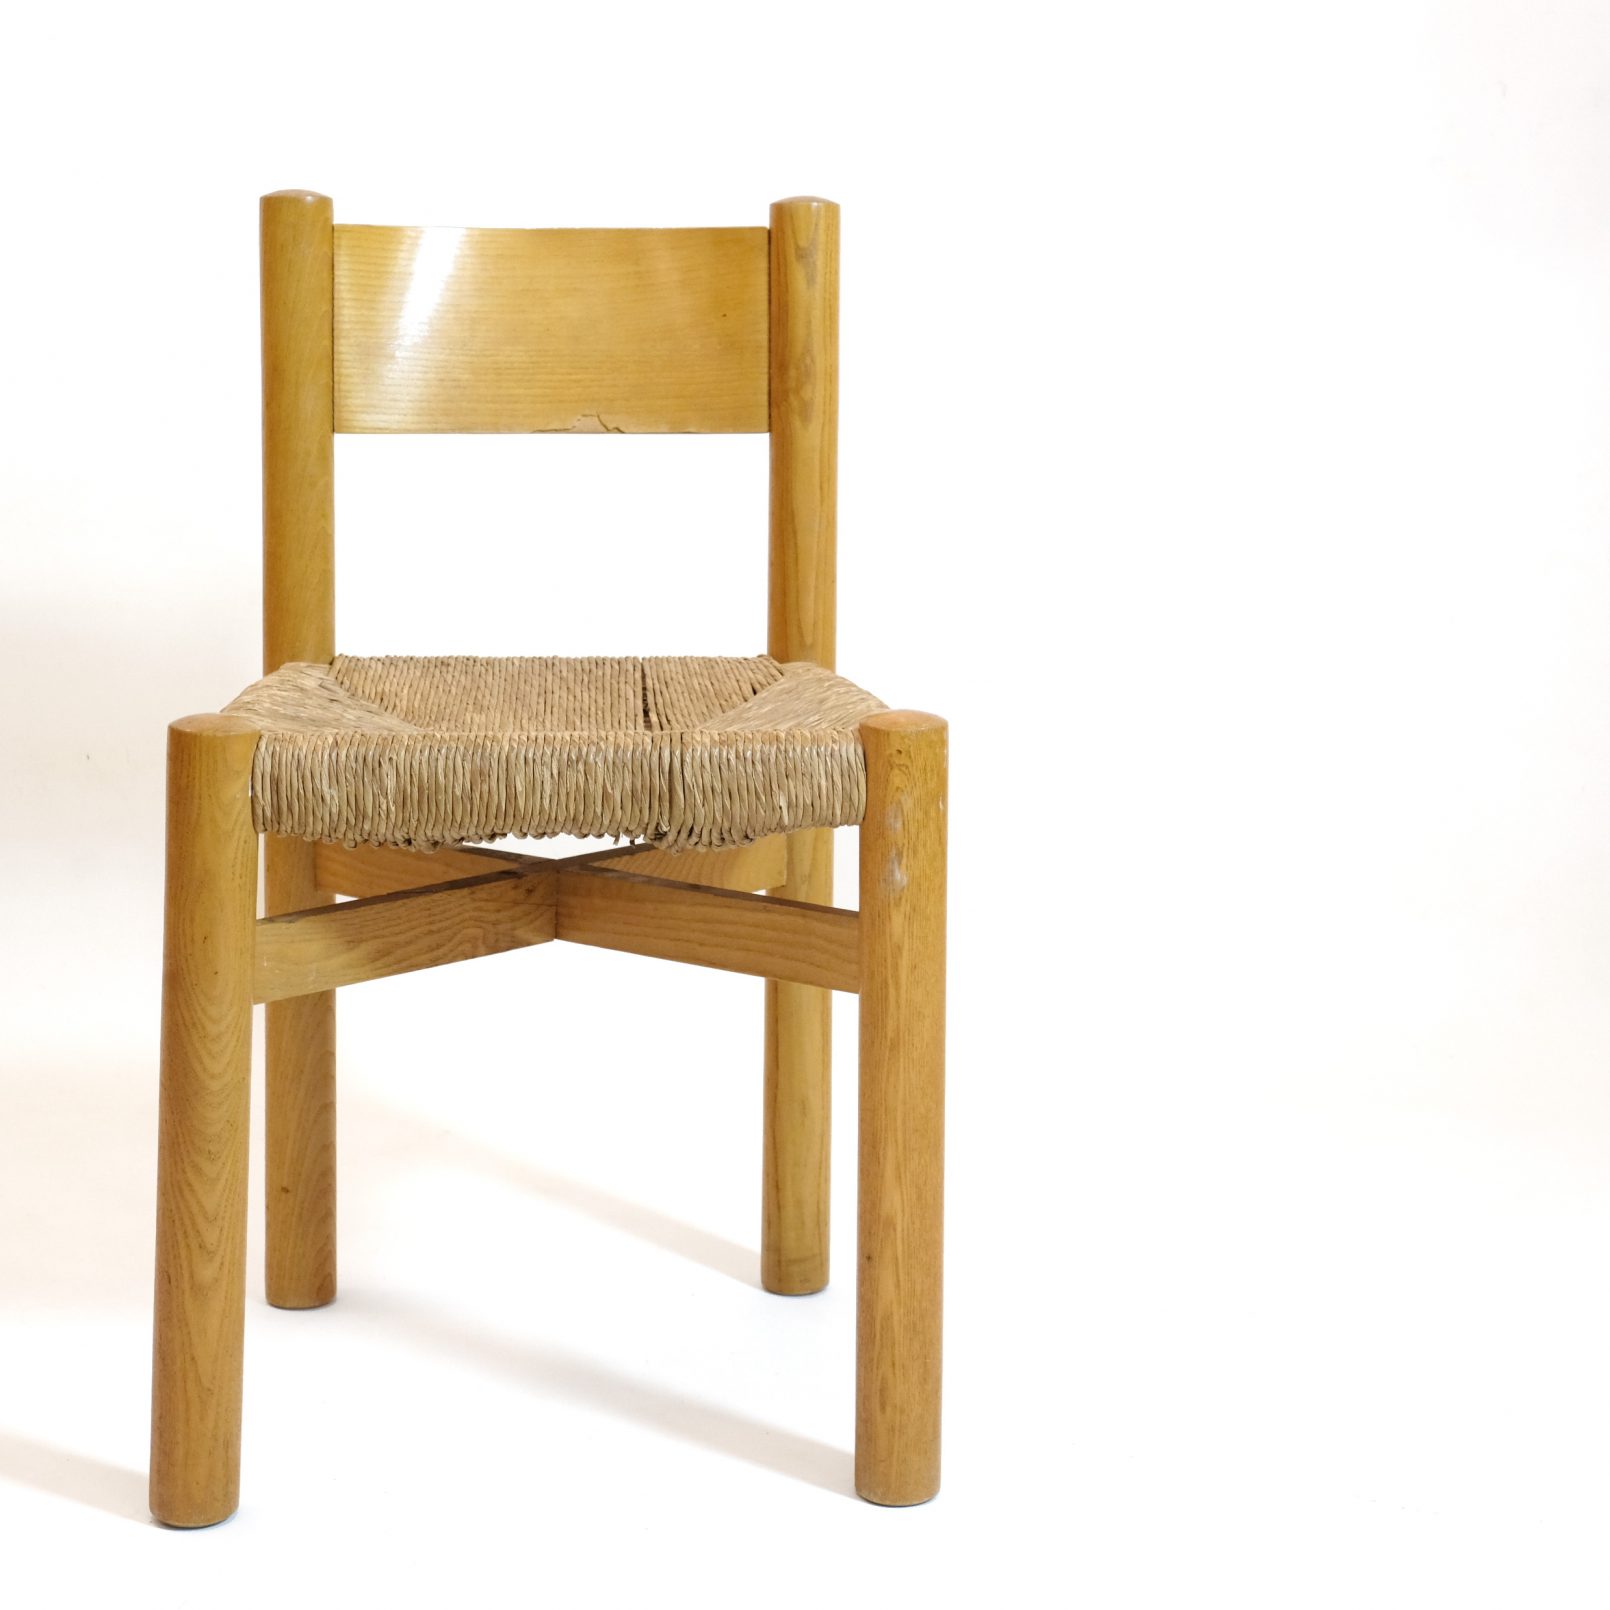 Charlotte Perriand, a Meribel chair, 1950s.